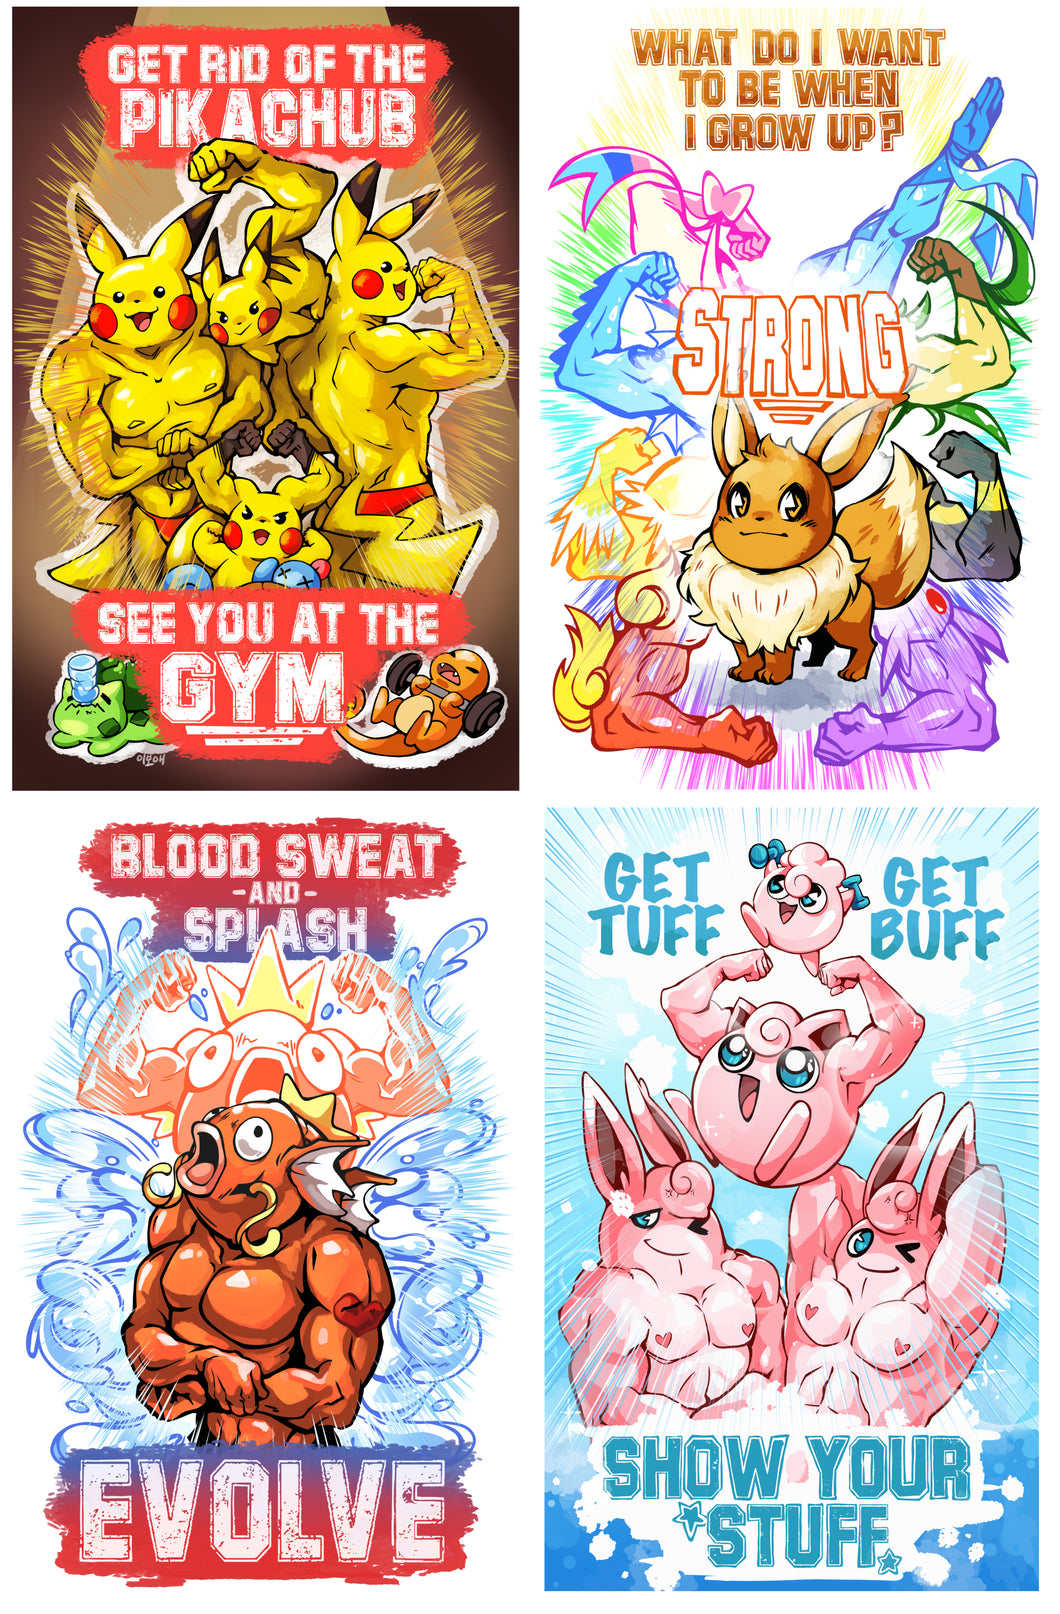 BUFF Pokemon Series